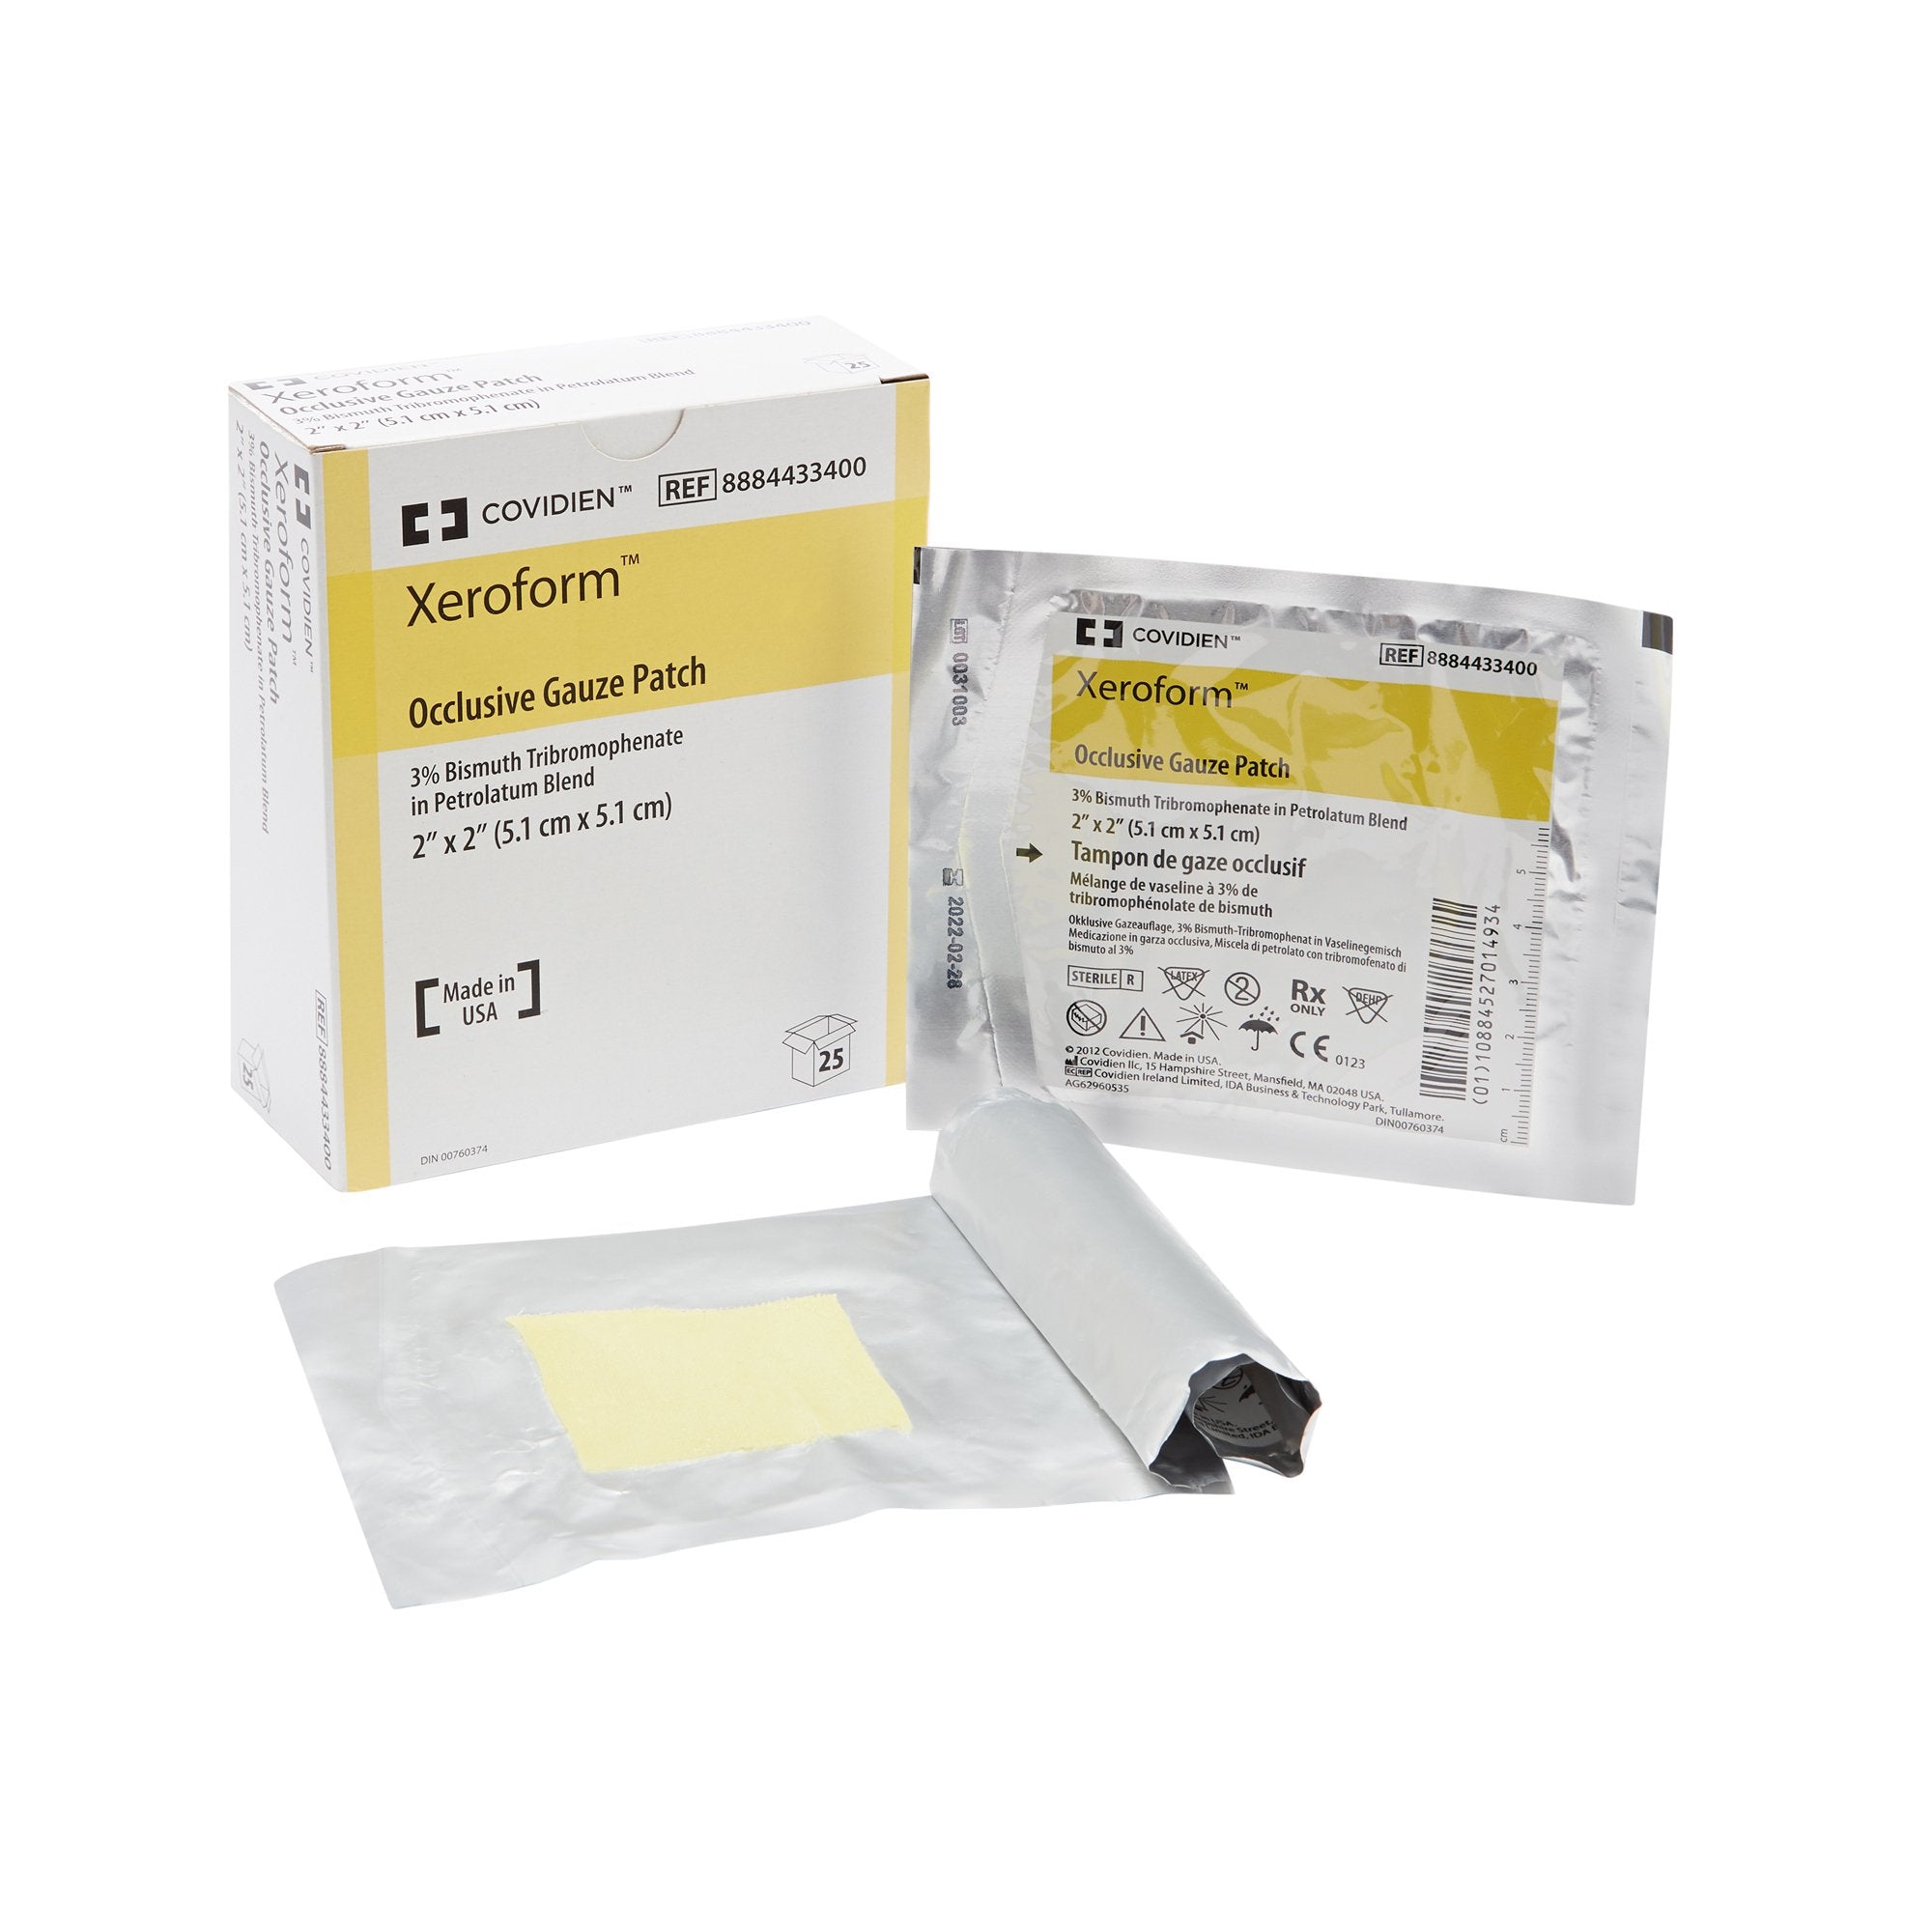 TENSOPLAST FABRIC ELASTIC TAPE - 5.1 cm x 4.6 m 6/BOX - First Aid Direct